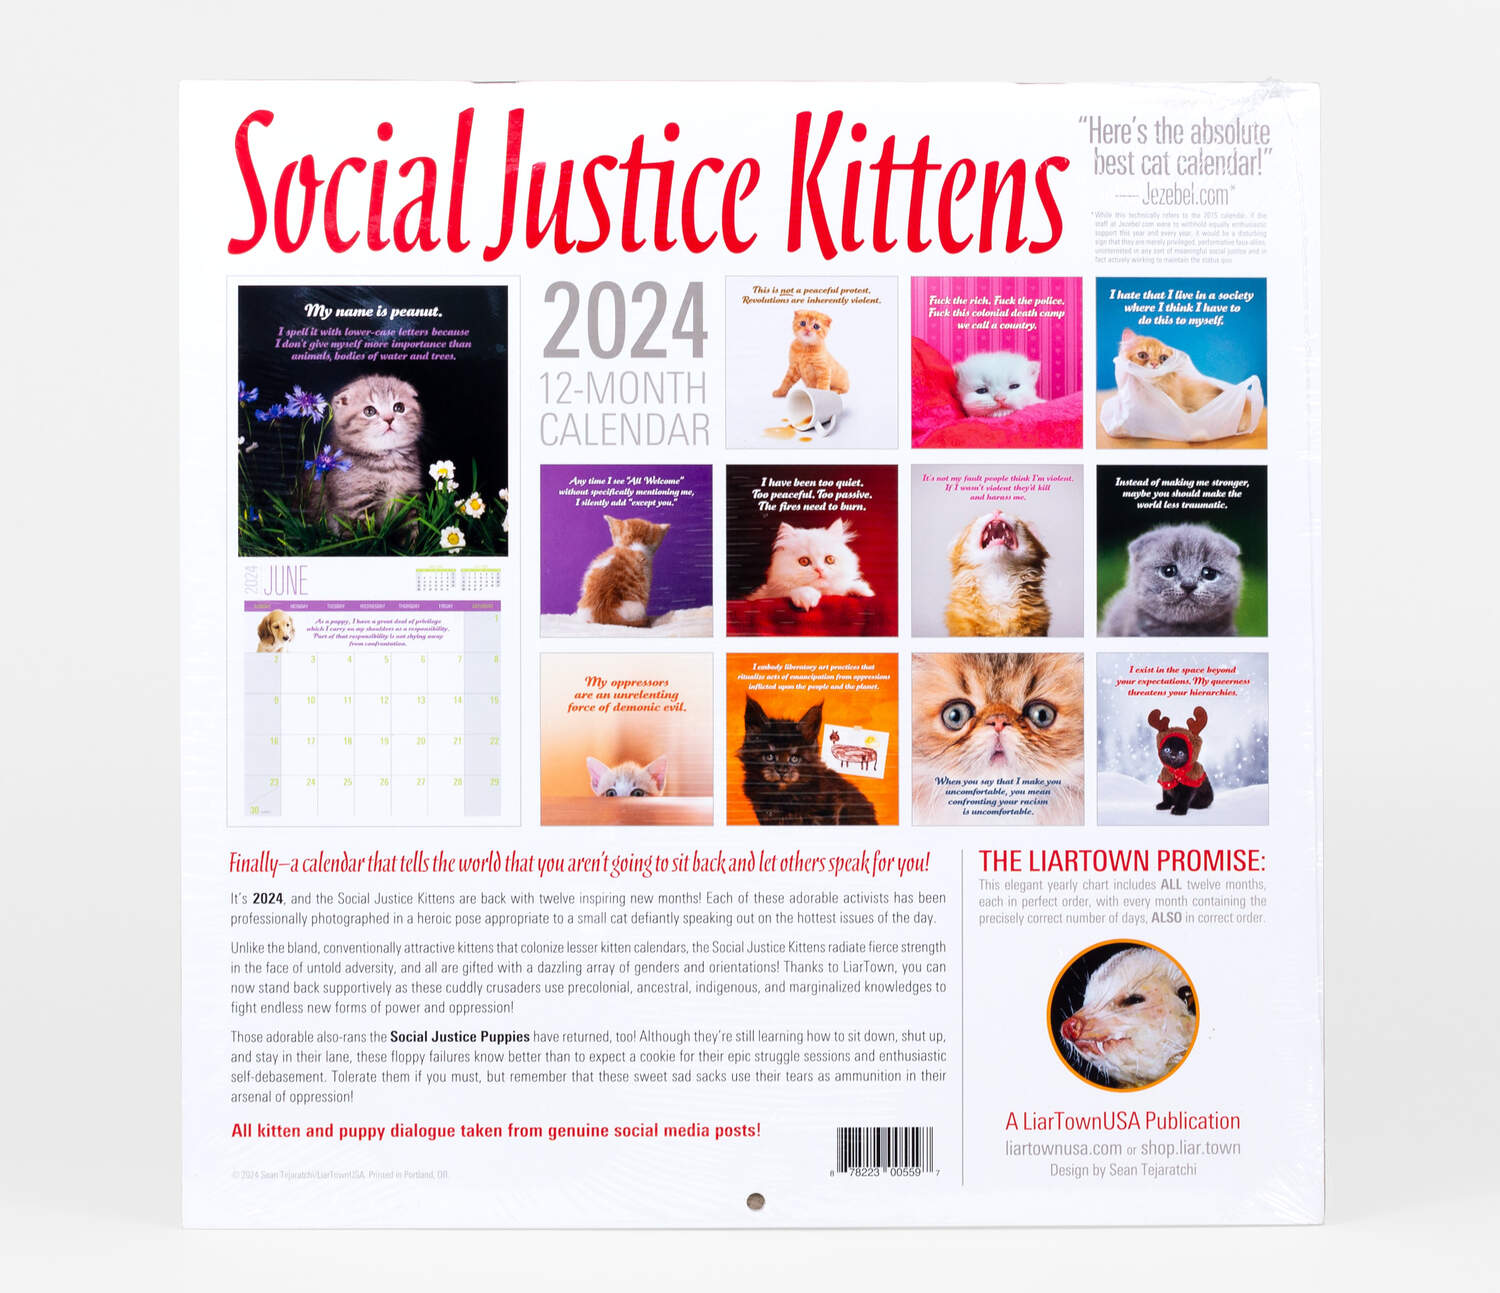 Social Justice Kittens 2024 Calendar Nook & Cranny Books